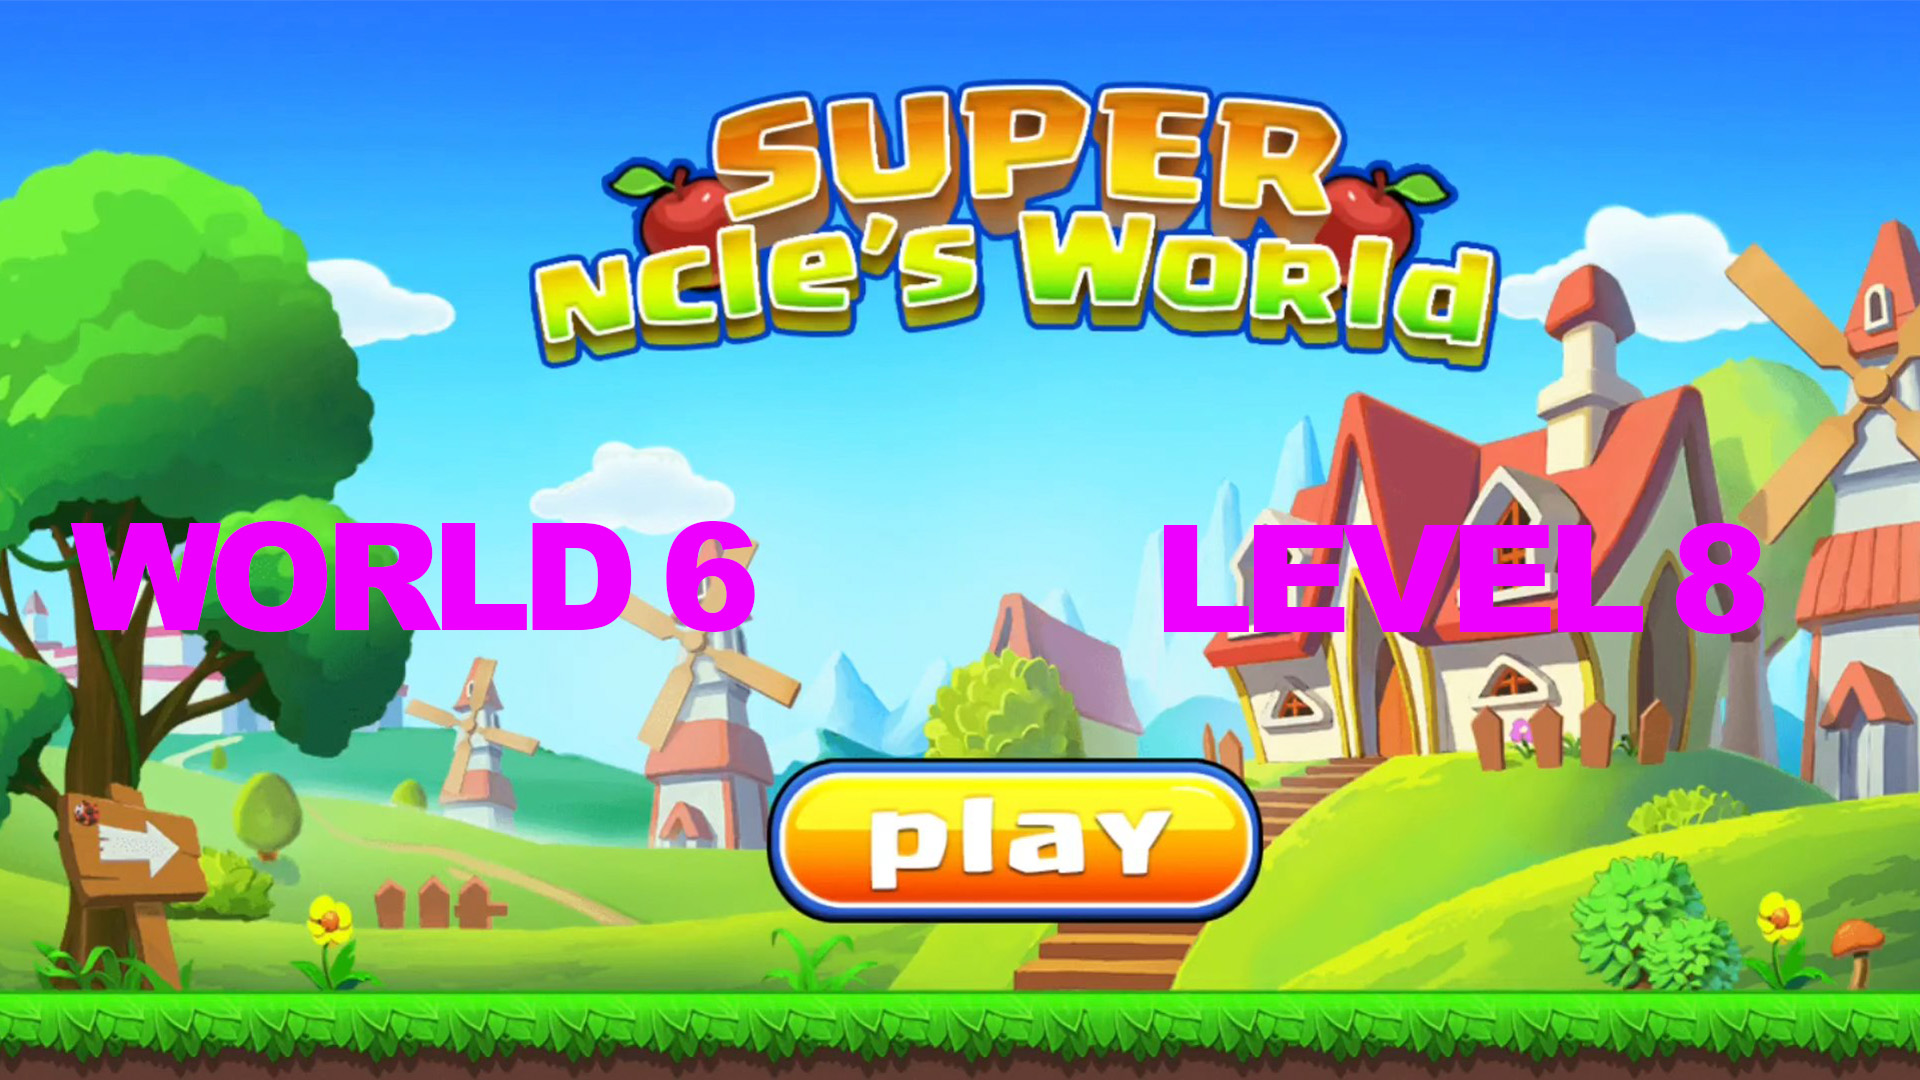 Super ncle's  World 6. Level 8.